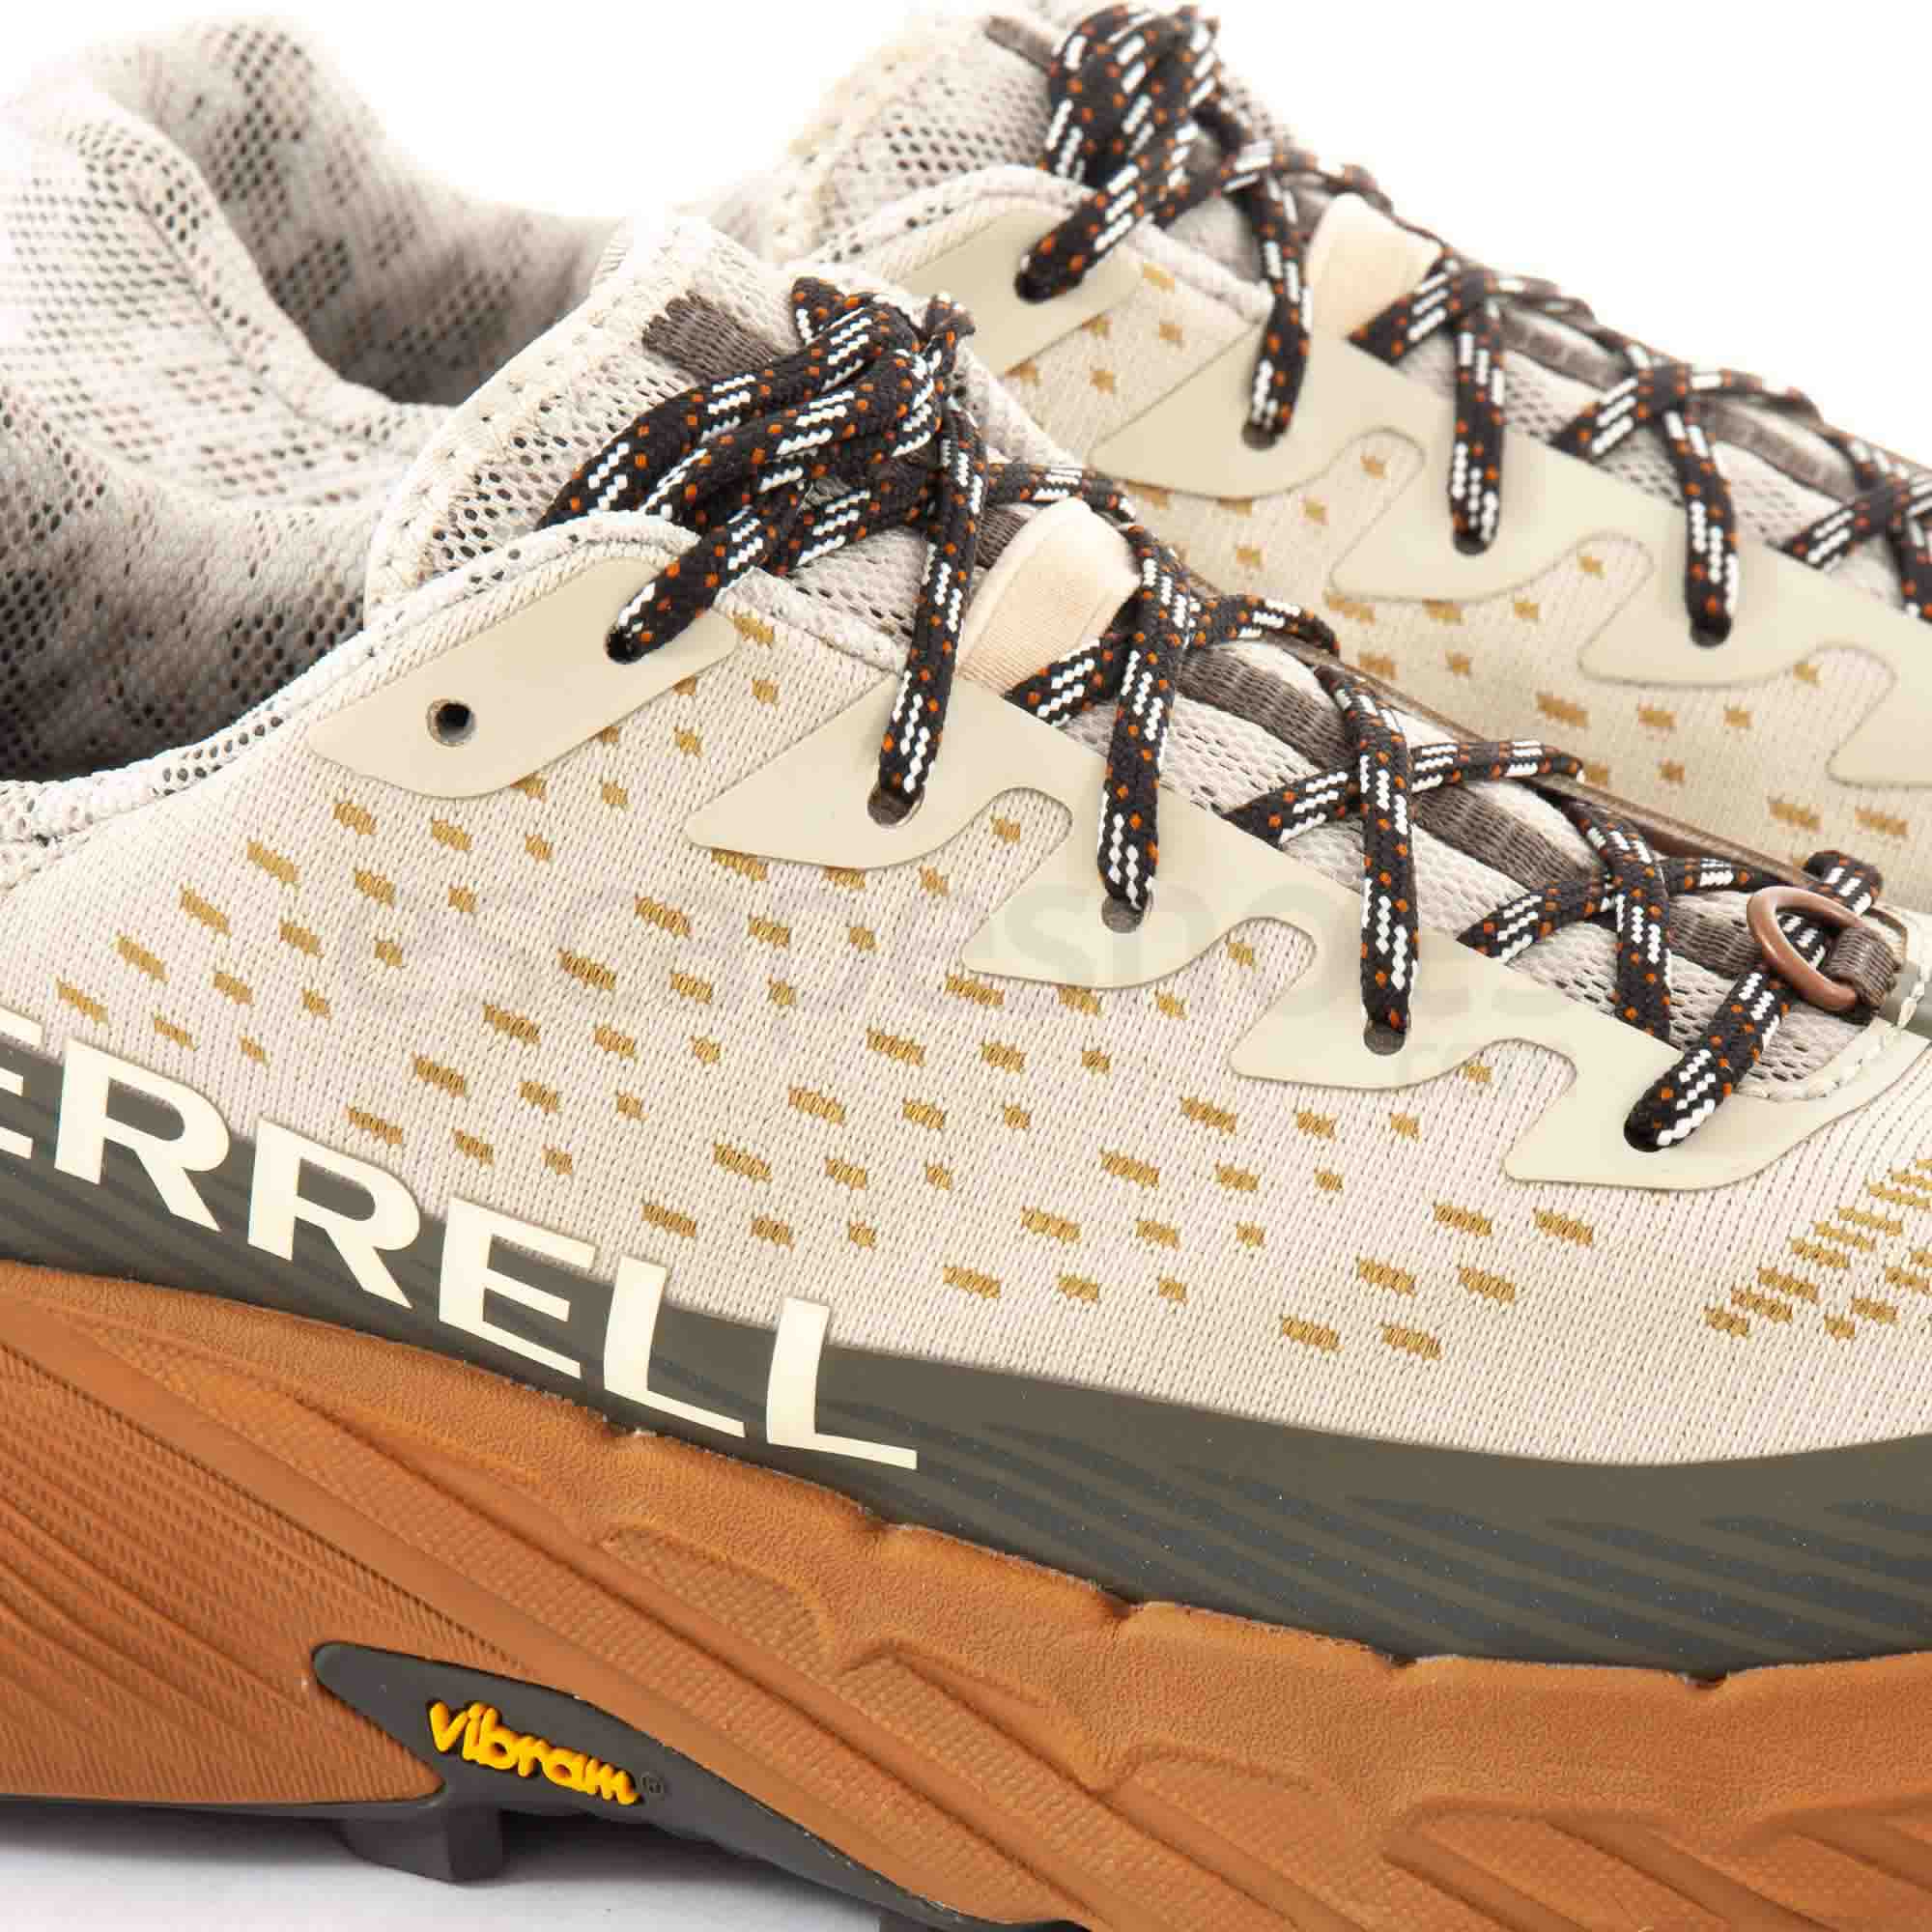 Merrell Zapatillas running neutras - oyster/beige 